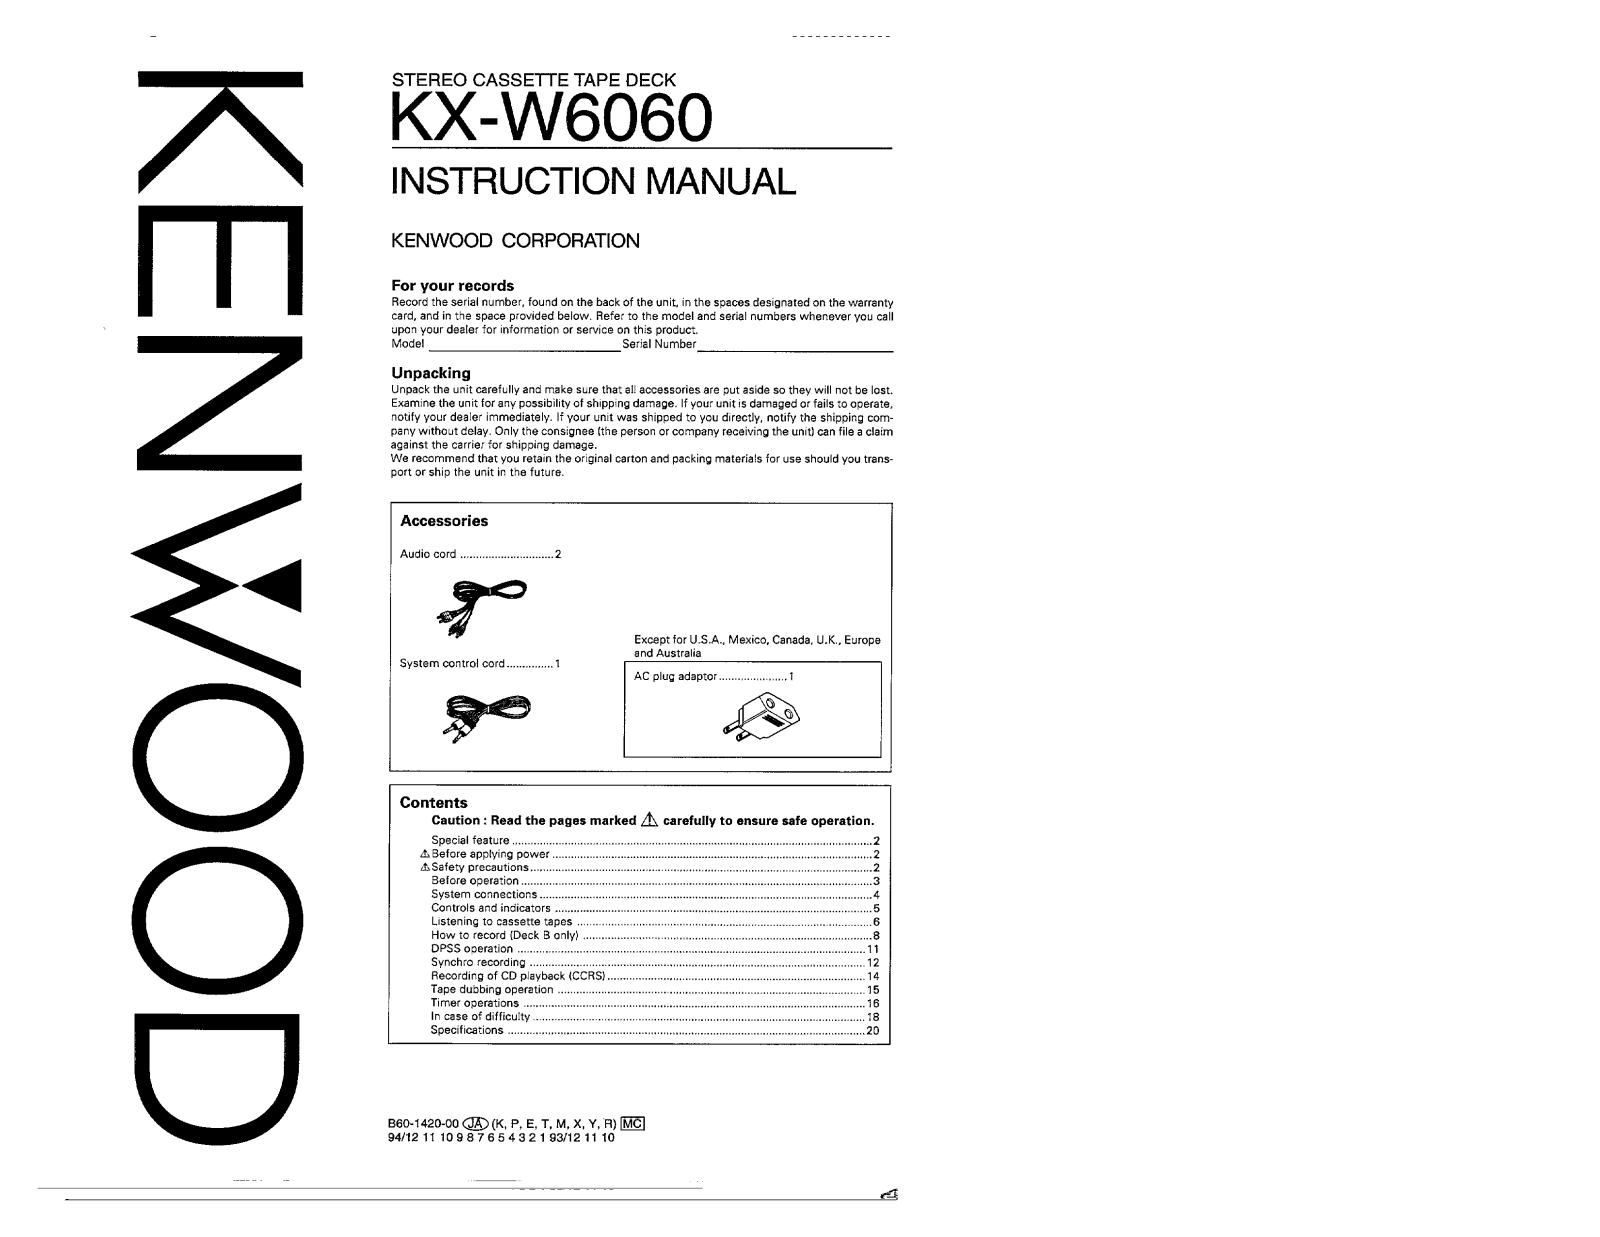 Kenwood KX-W6060 Owner's Manual